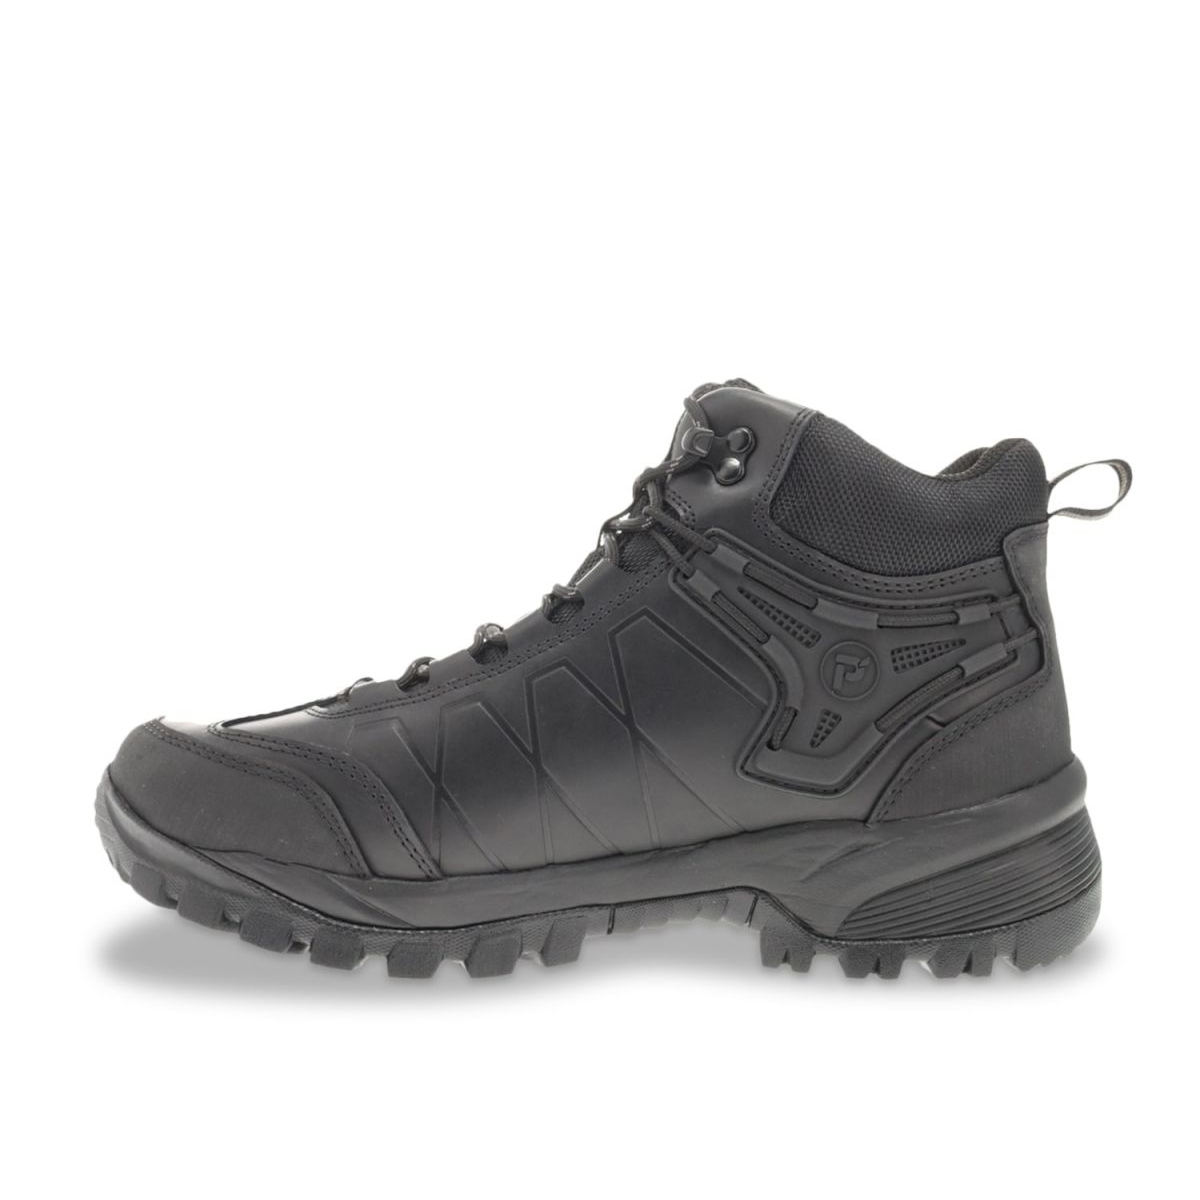 Propet Men's Ridge Walker Force Hiking Boots Black - MBA052LBLK BLACK - BLACK, 12